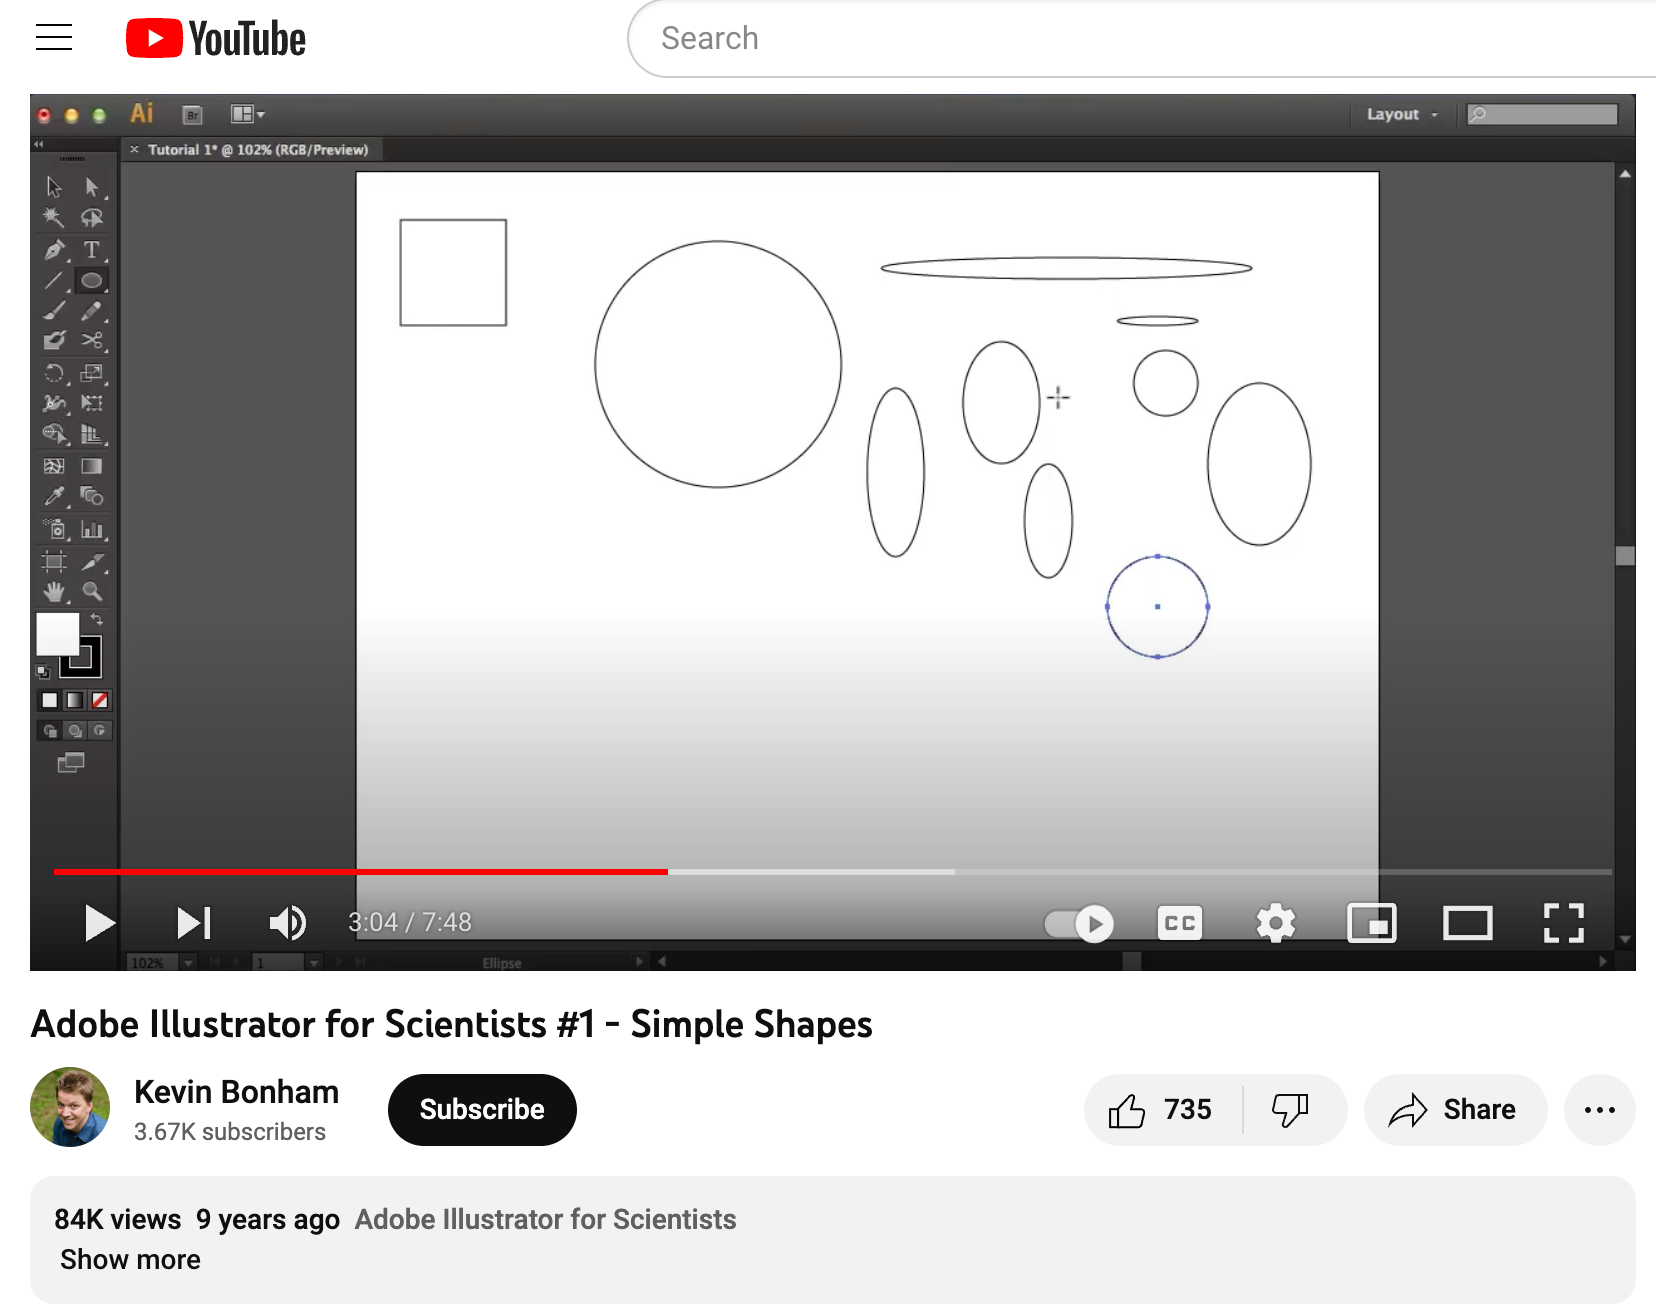 Kevin Bonham Adobe Illustrator for Scientists YouTube Channel